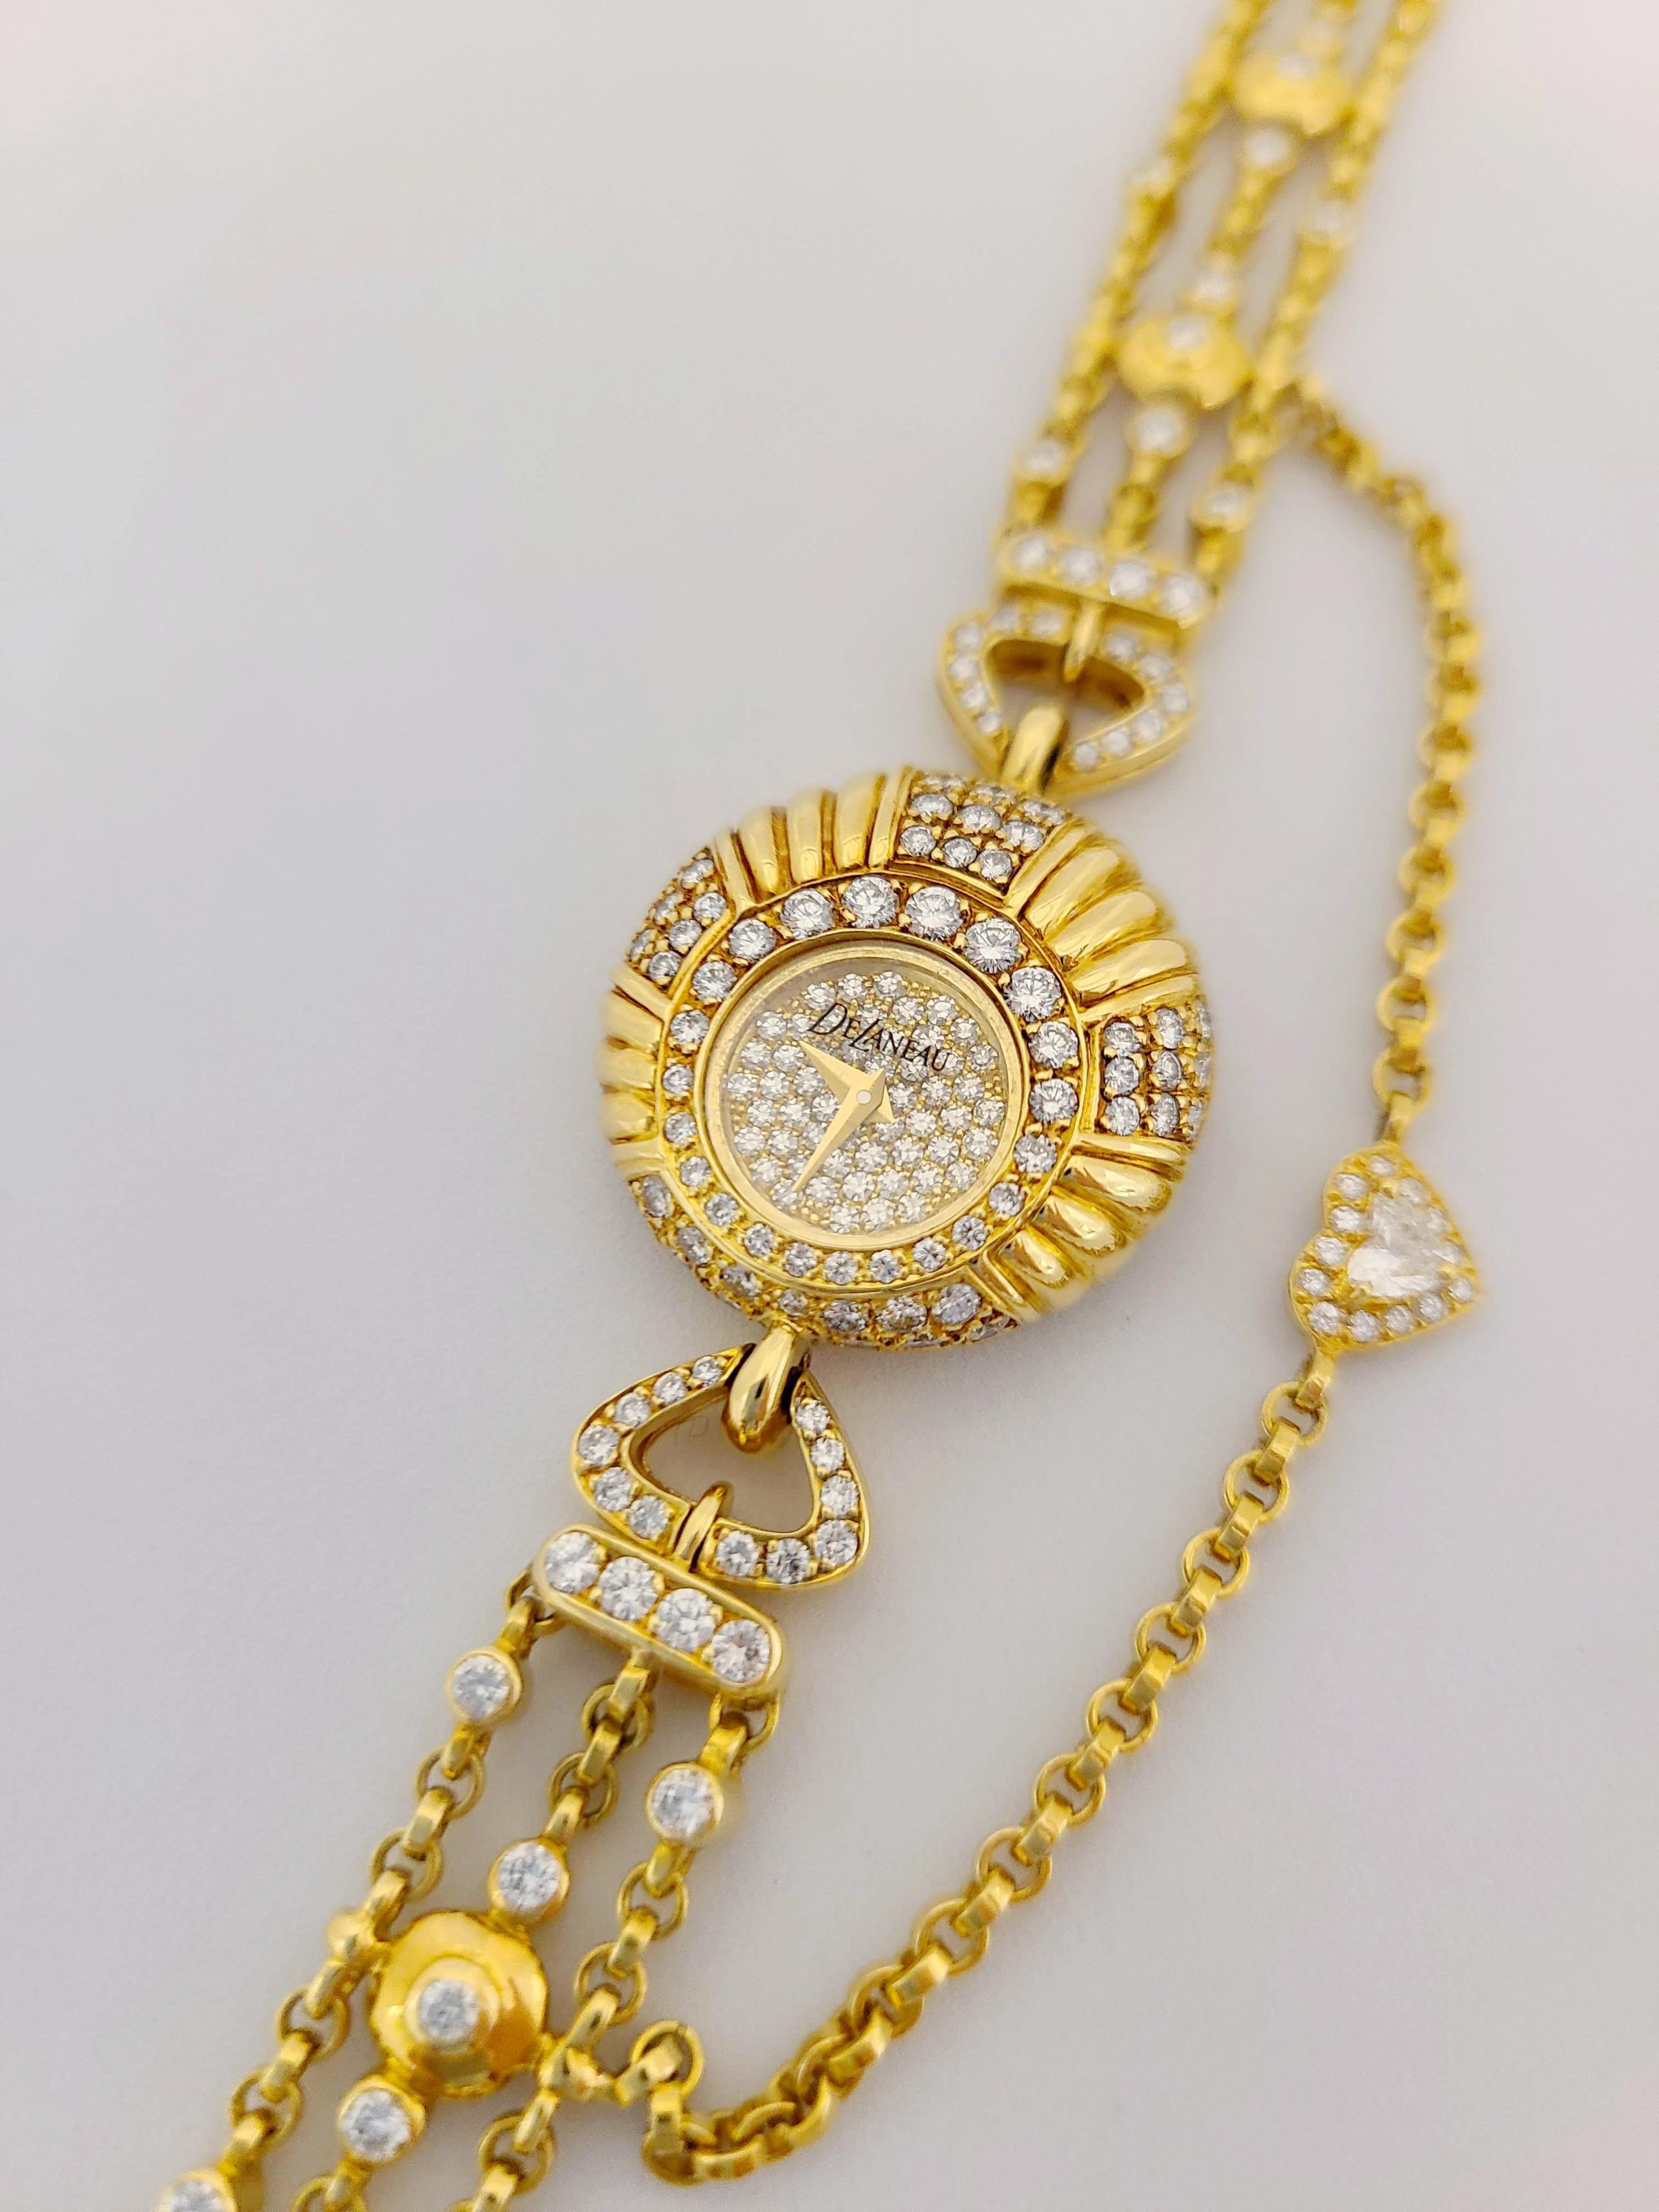 Delaneau 18 Karat Yellow Gold and 3.10 Carat Diamond Bracelet Watch For Sale 1